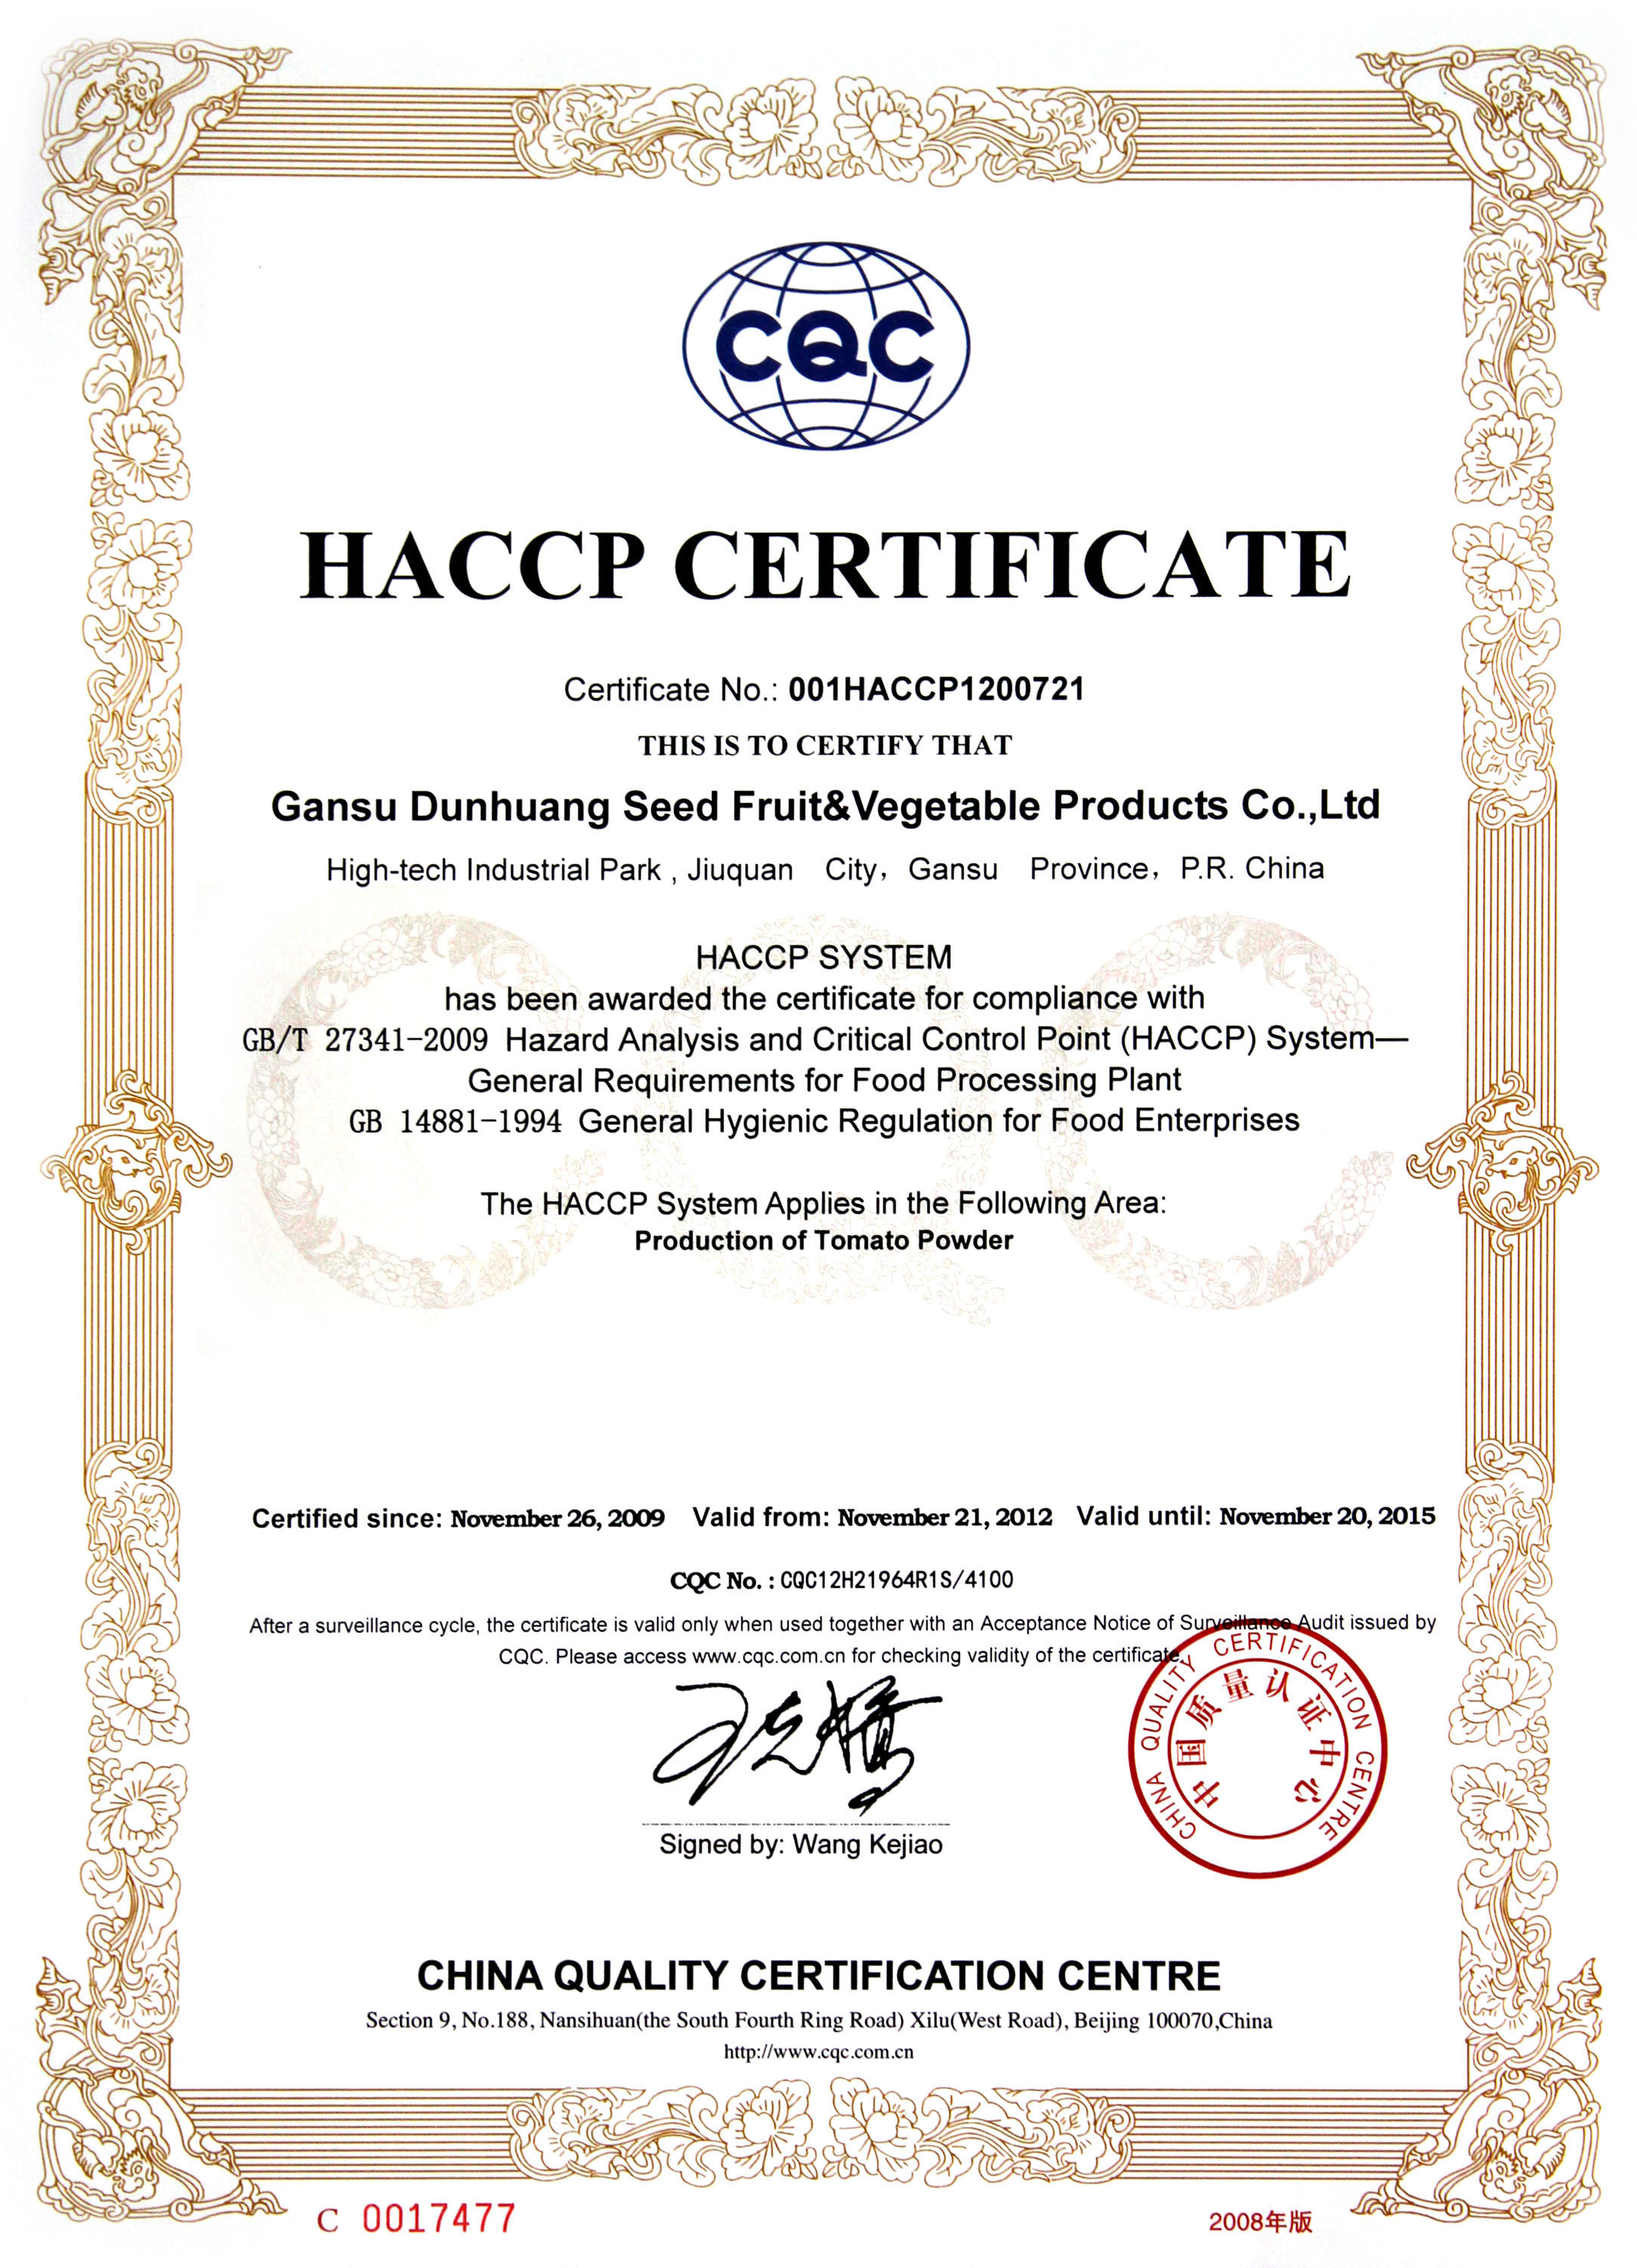 Haccp certificate